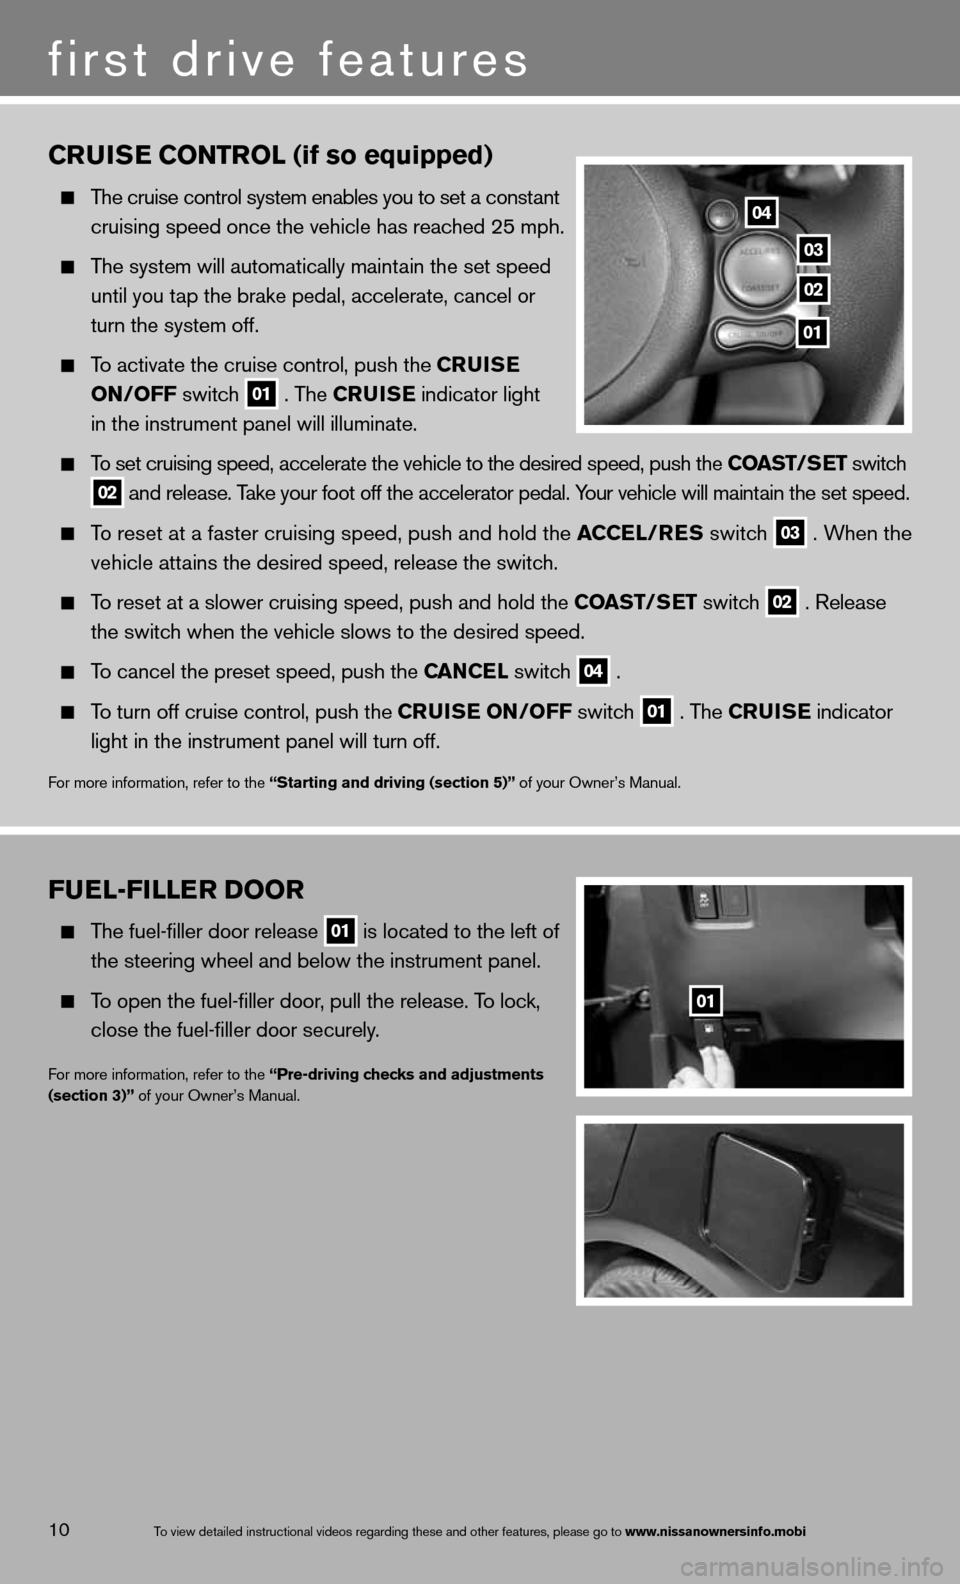 NISSAN VERSA SEDAN 2013 2.G Quick Reference Guide Fuel-Filler Door
  The fuel-filler door release
 01 is located to the left of 
    the steering wheel and below the instrument panel. 
 
  To open the fuel-filler door, pull the release. To lock,   
 